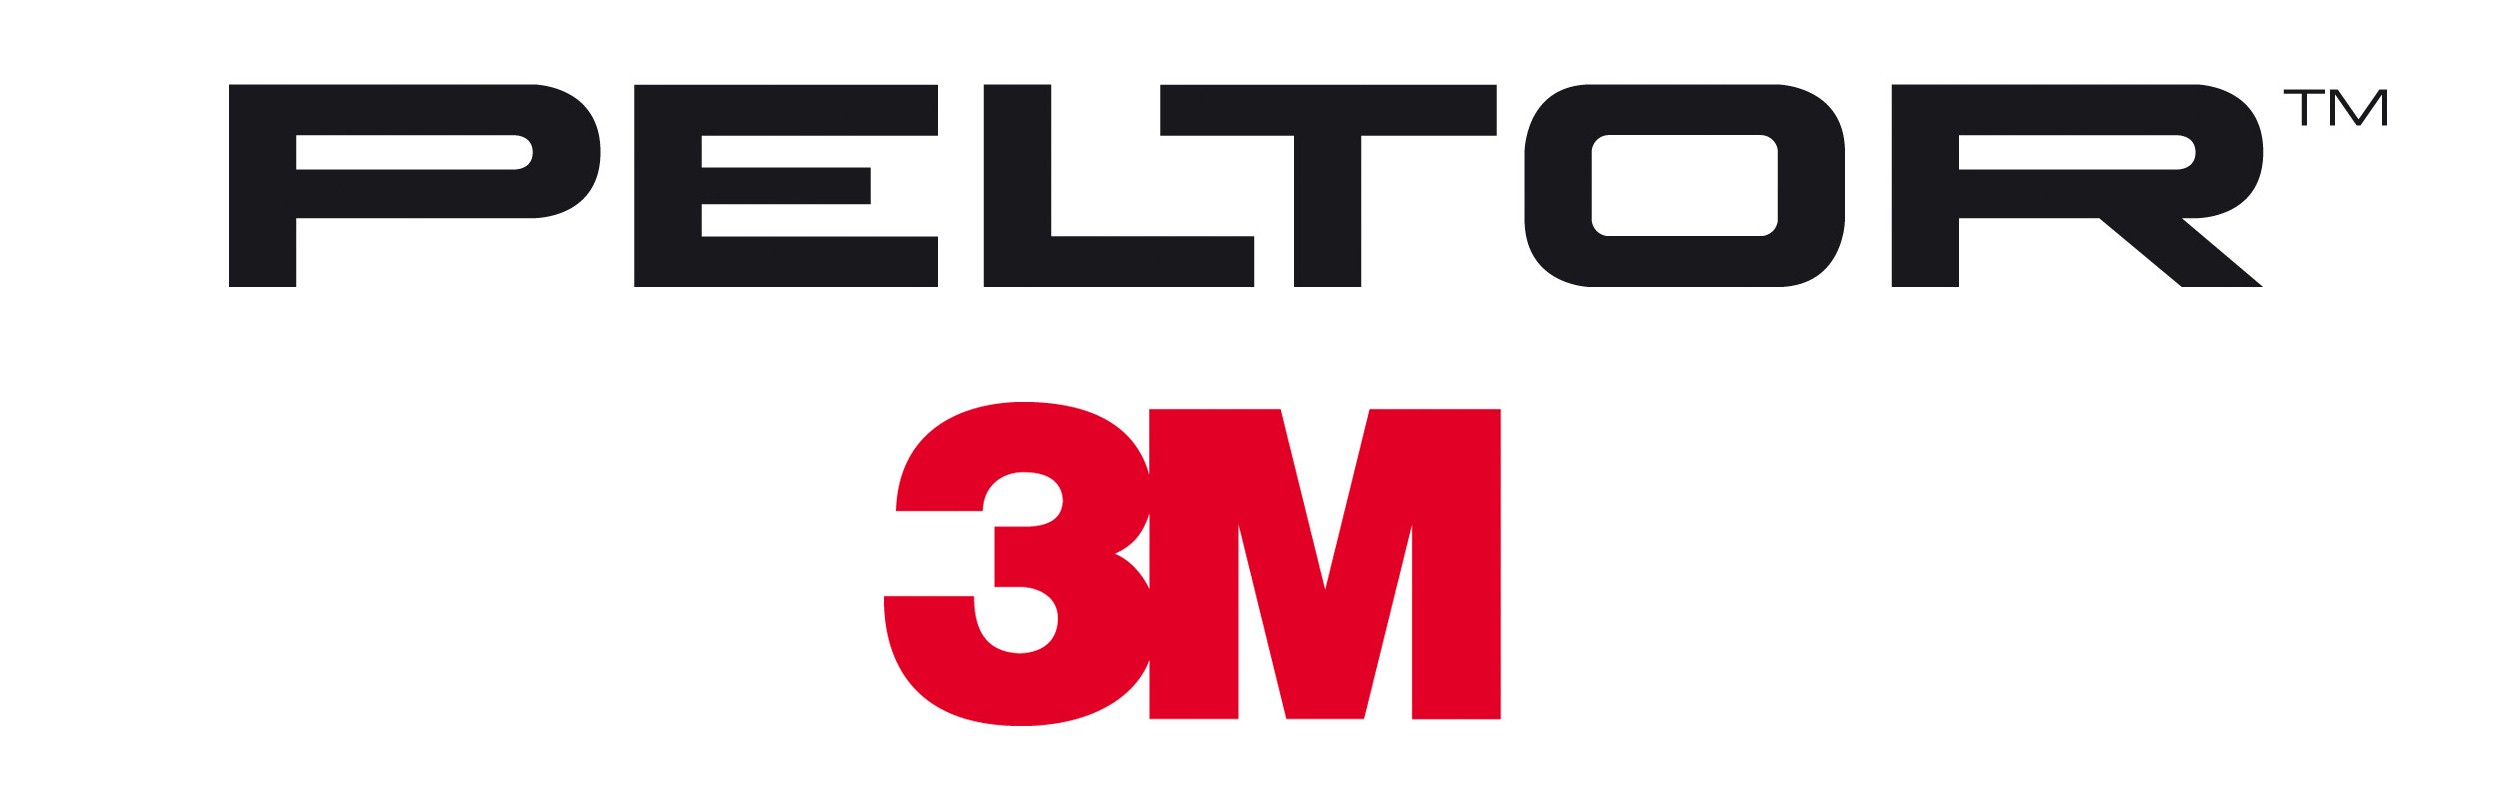 logo_peltor